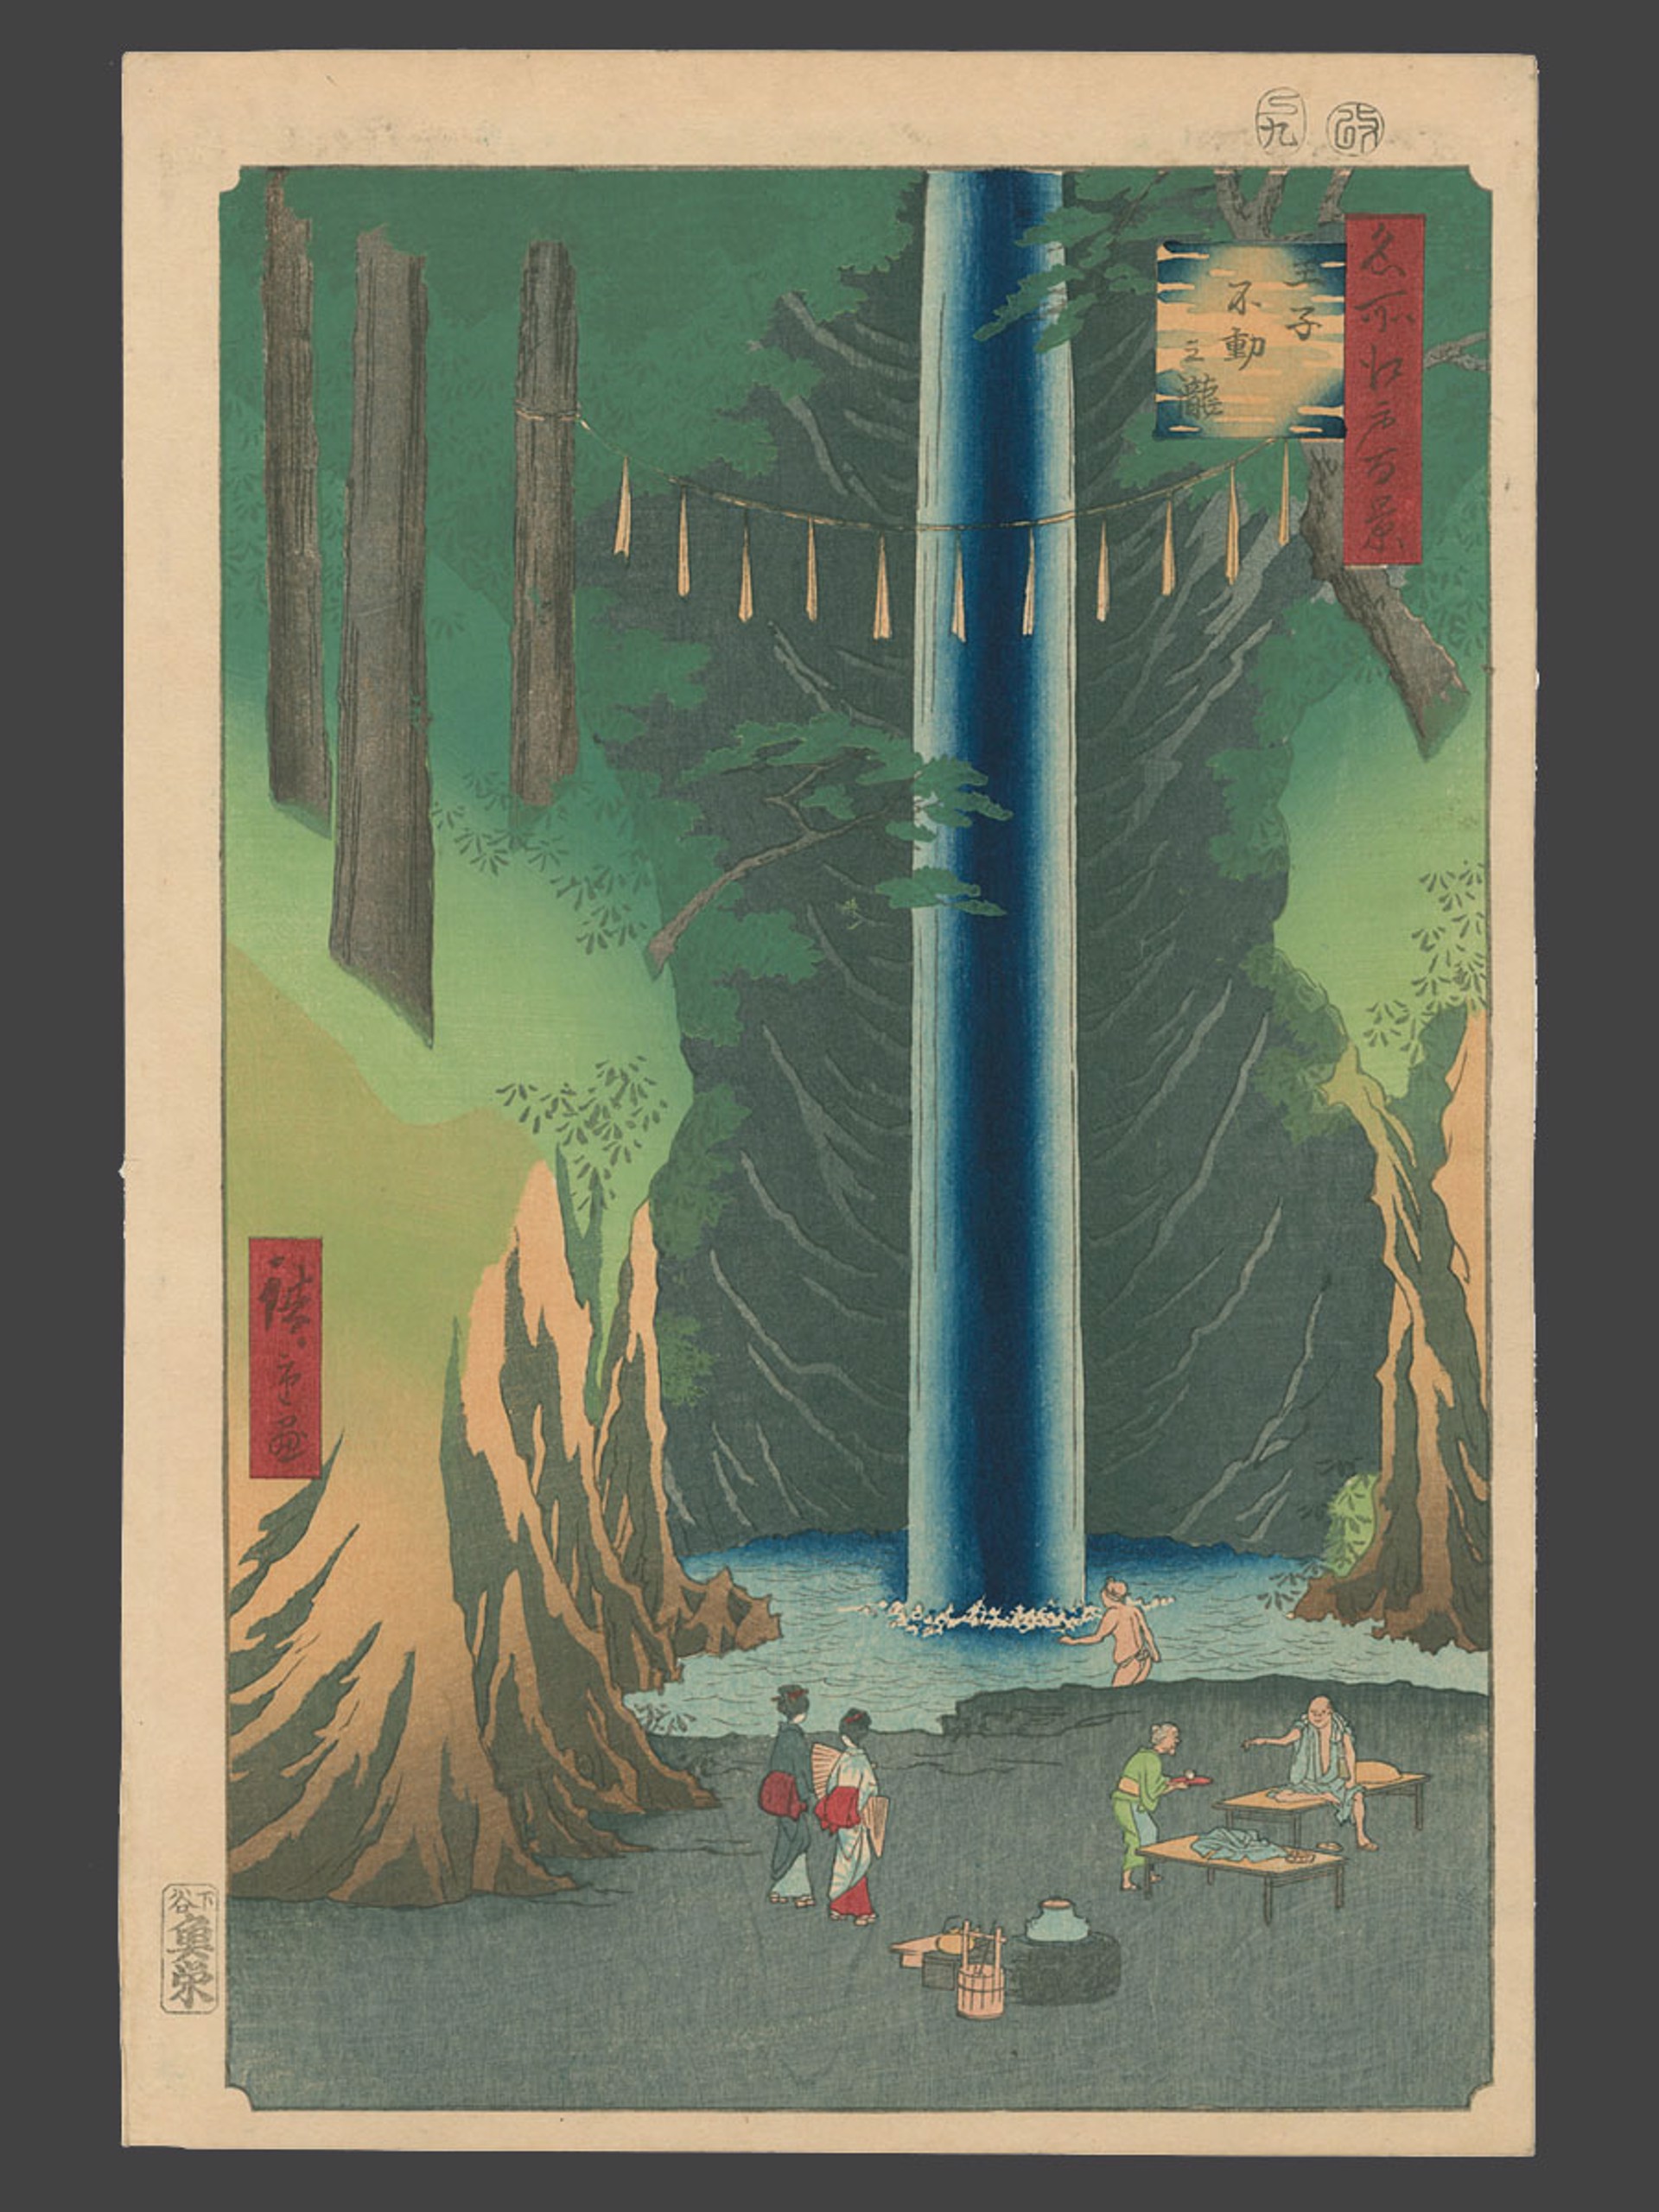 #49 Fudo Falls, Oji 100 Views of Edo by Hiroshige